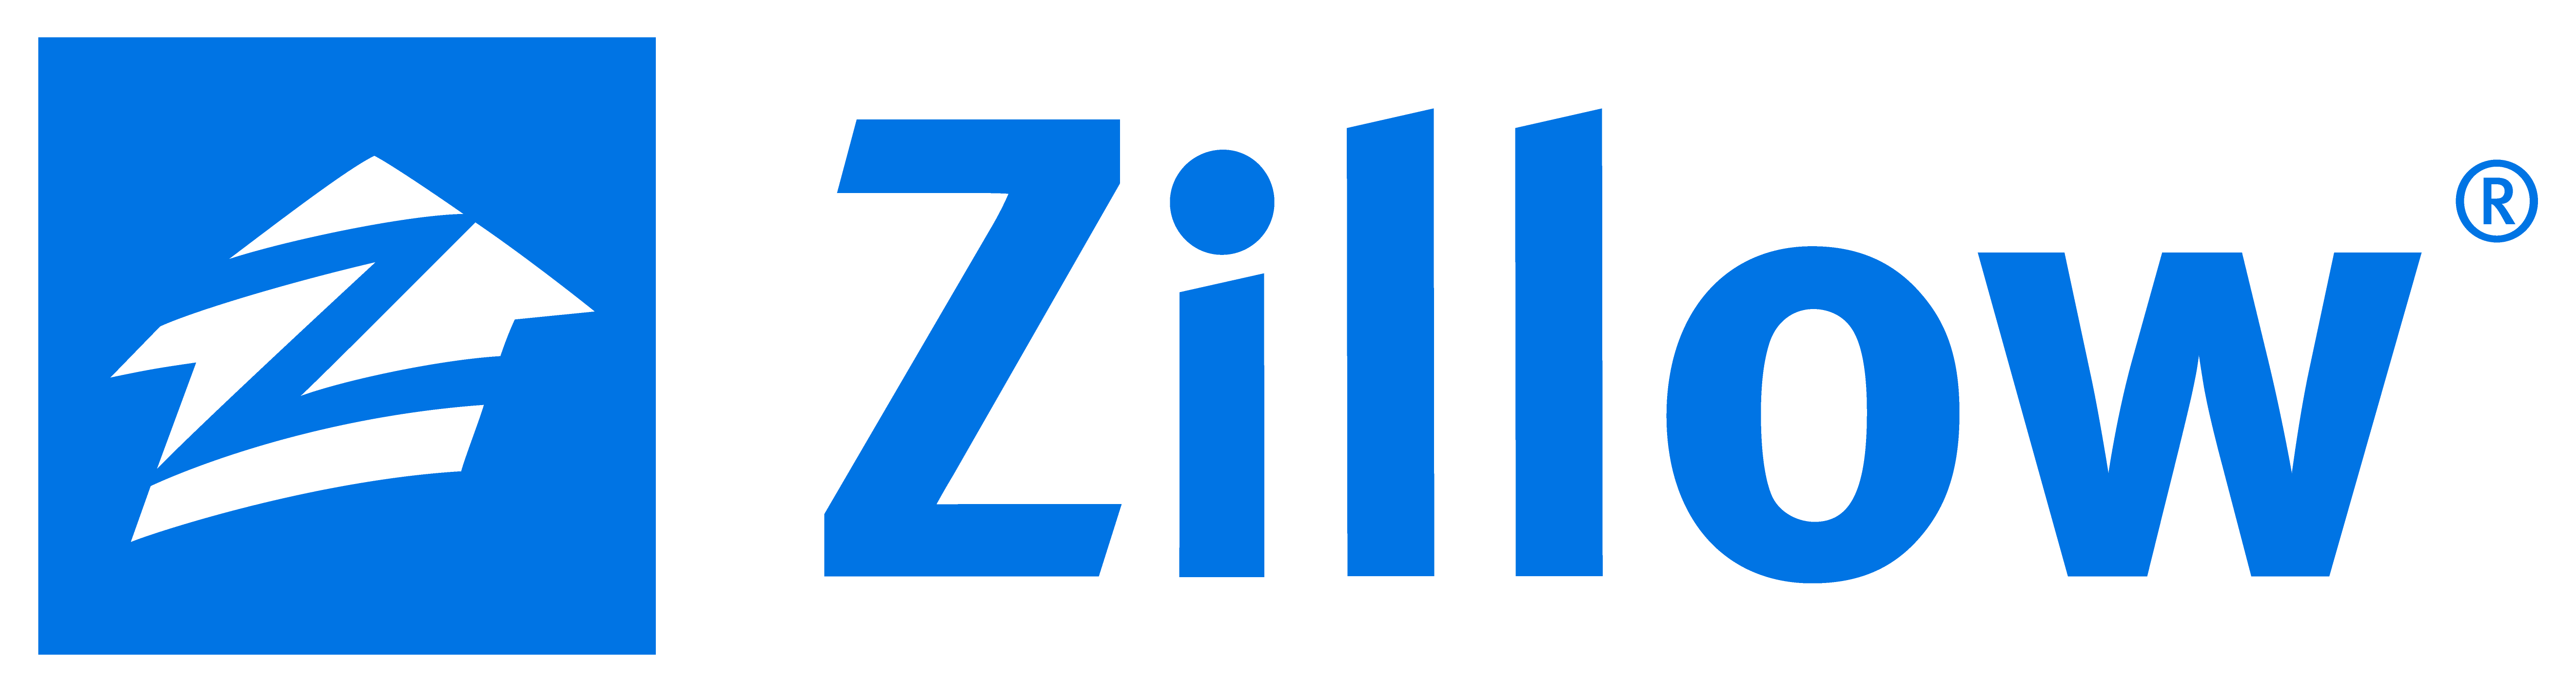 Zillow App Logo - Zillow-Logo - Apptentive